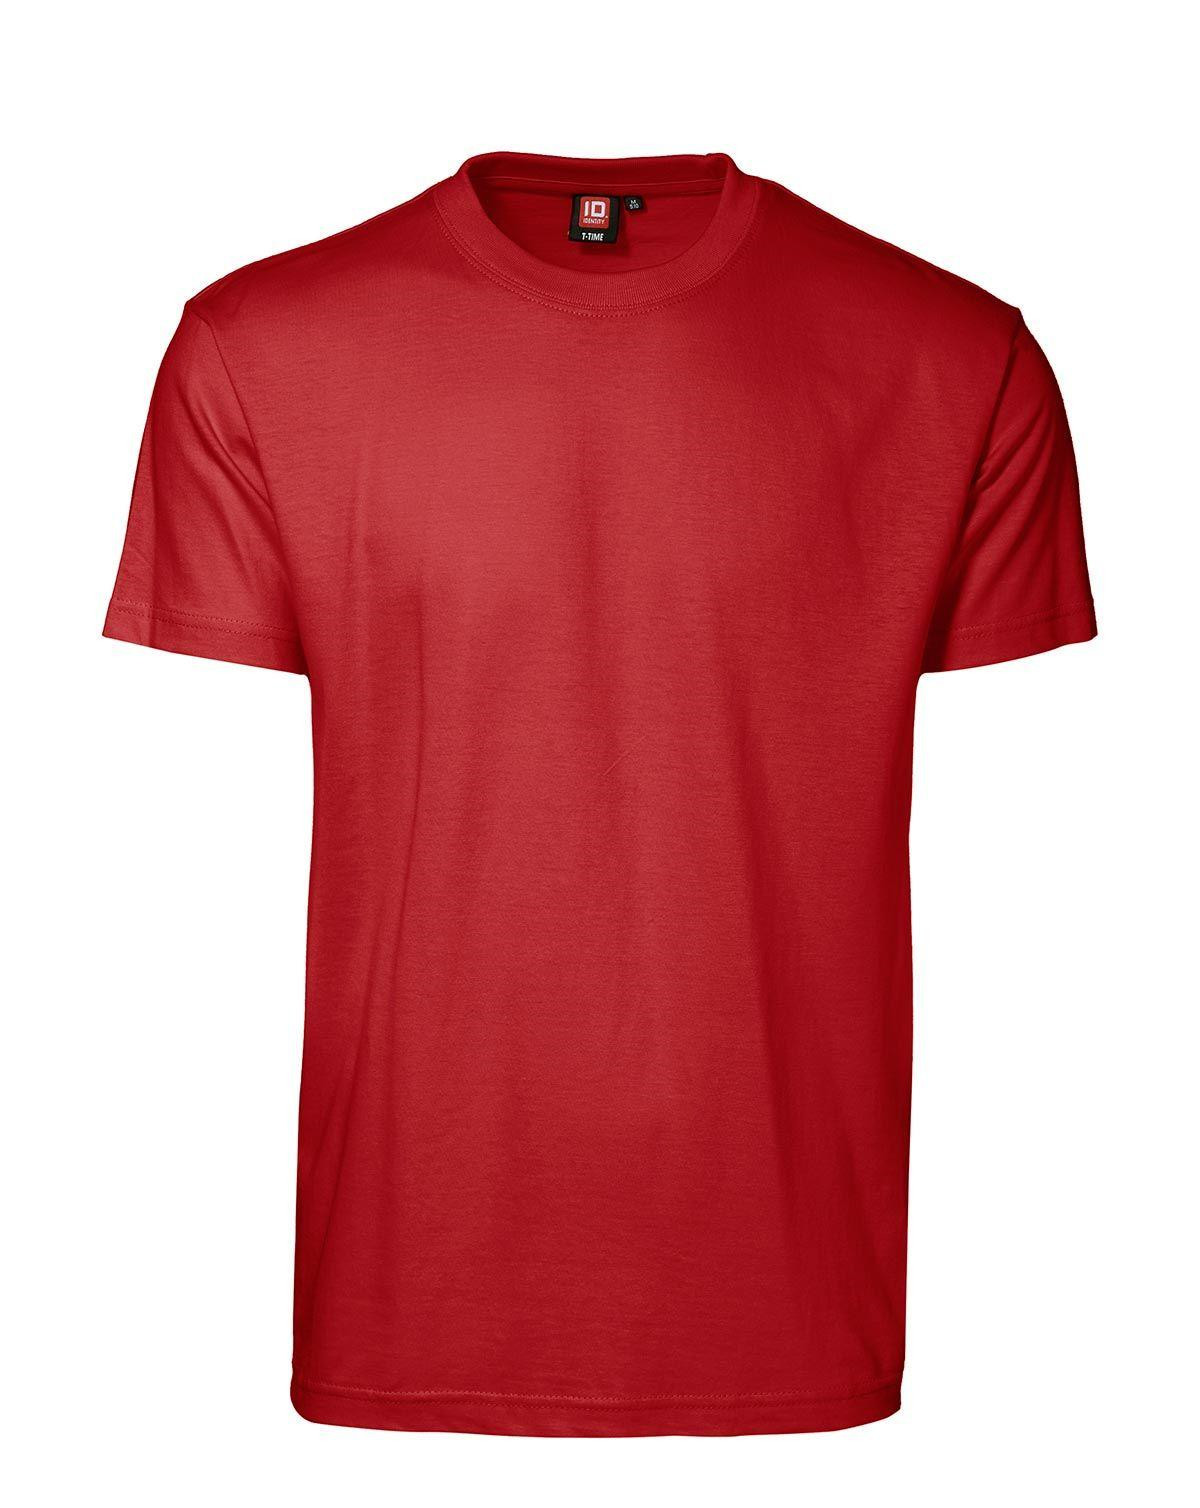 Billede af ID T-Time T-shirt, rund hals (Rød, 2XL) hos Army Star